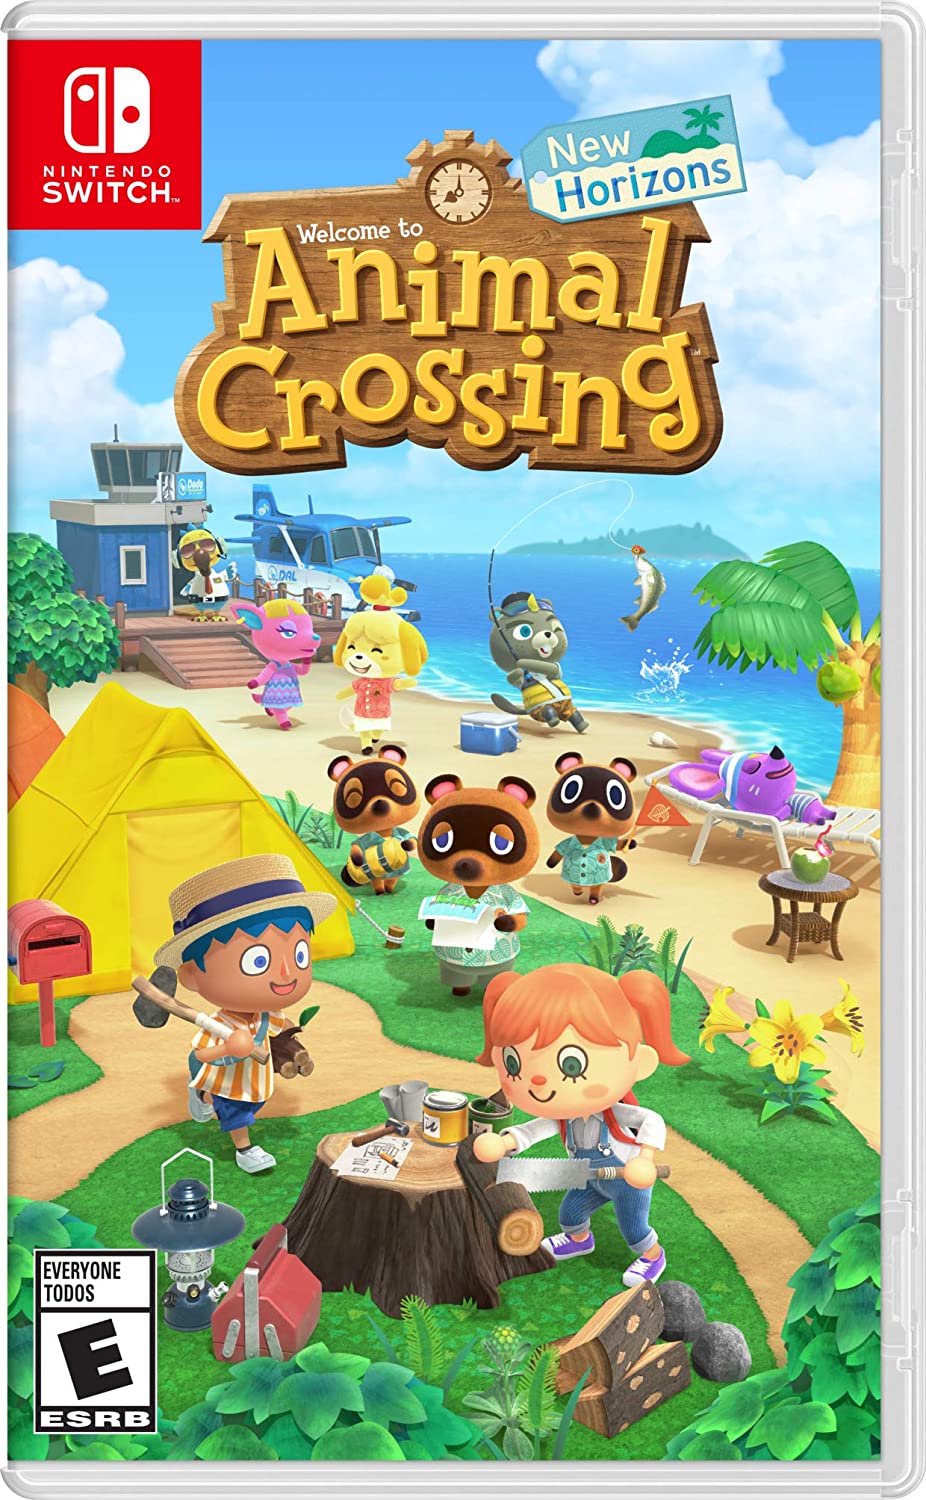 Animal Crossing New Horizons Digital Download Key (Nintendo Switch)